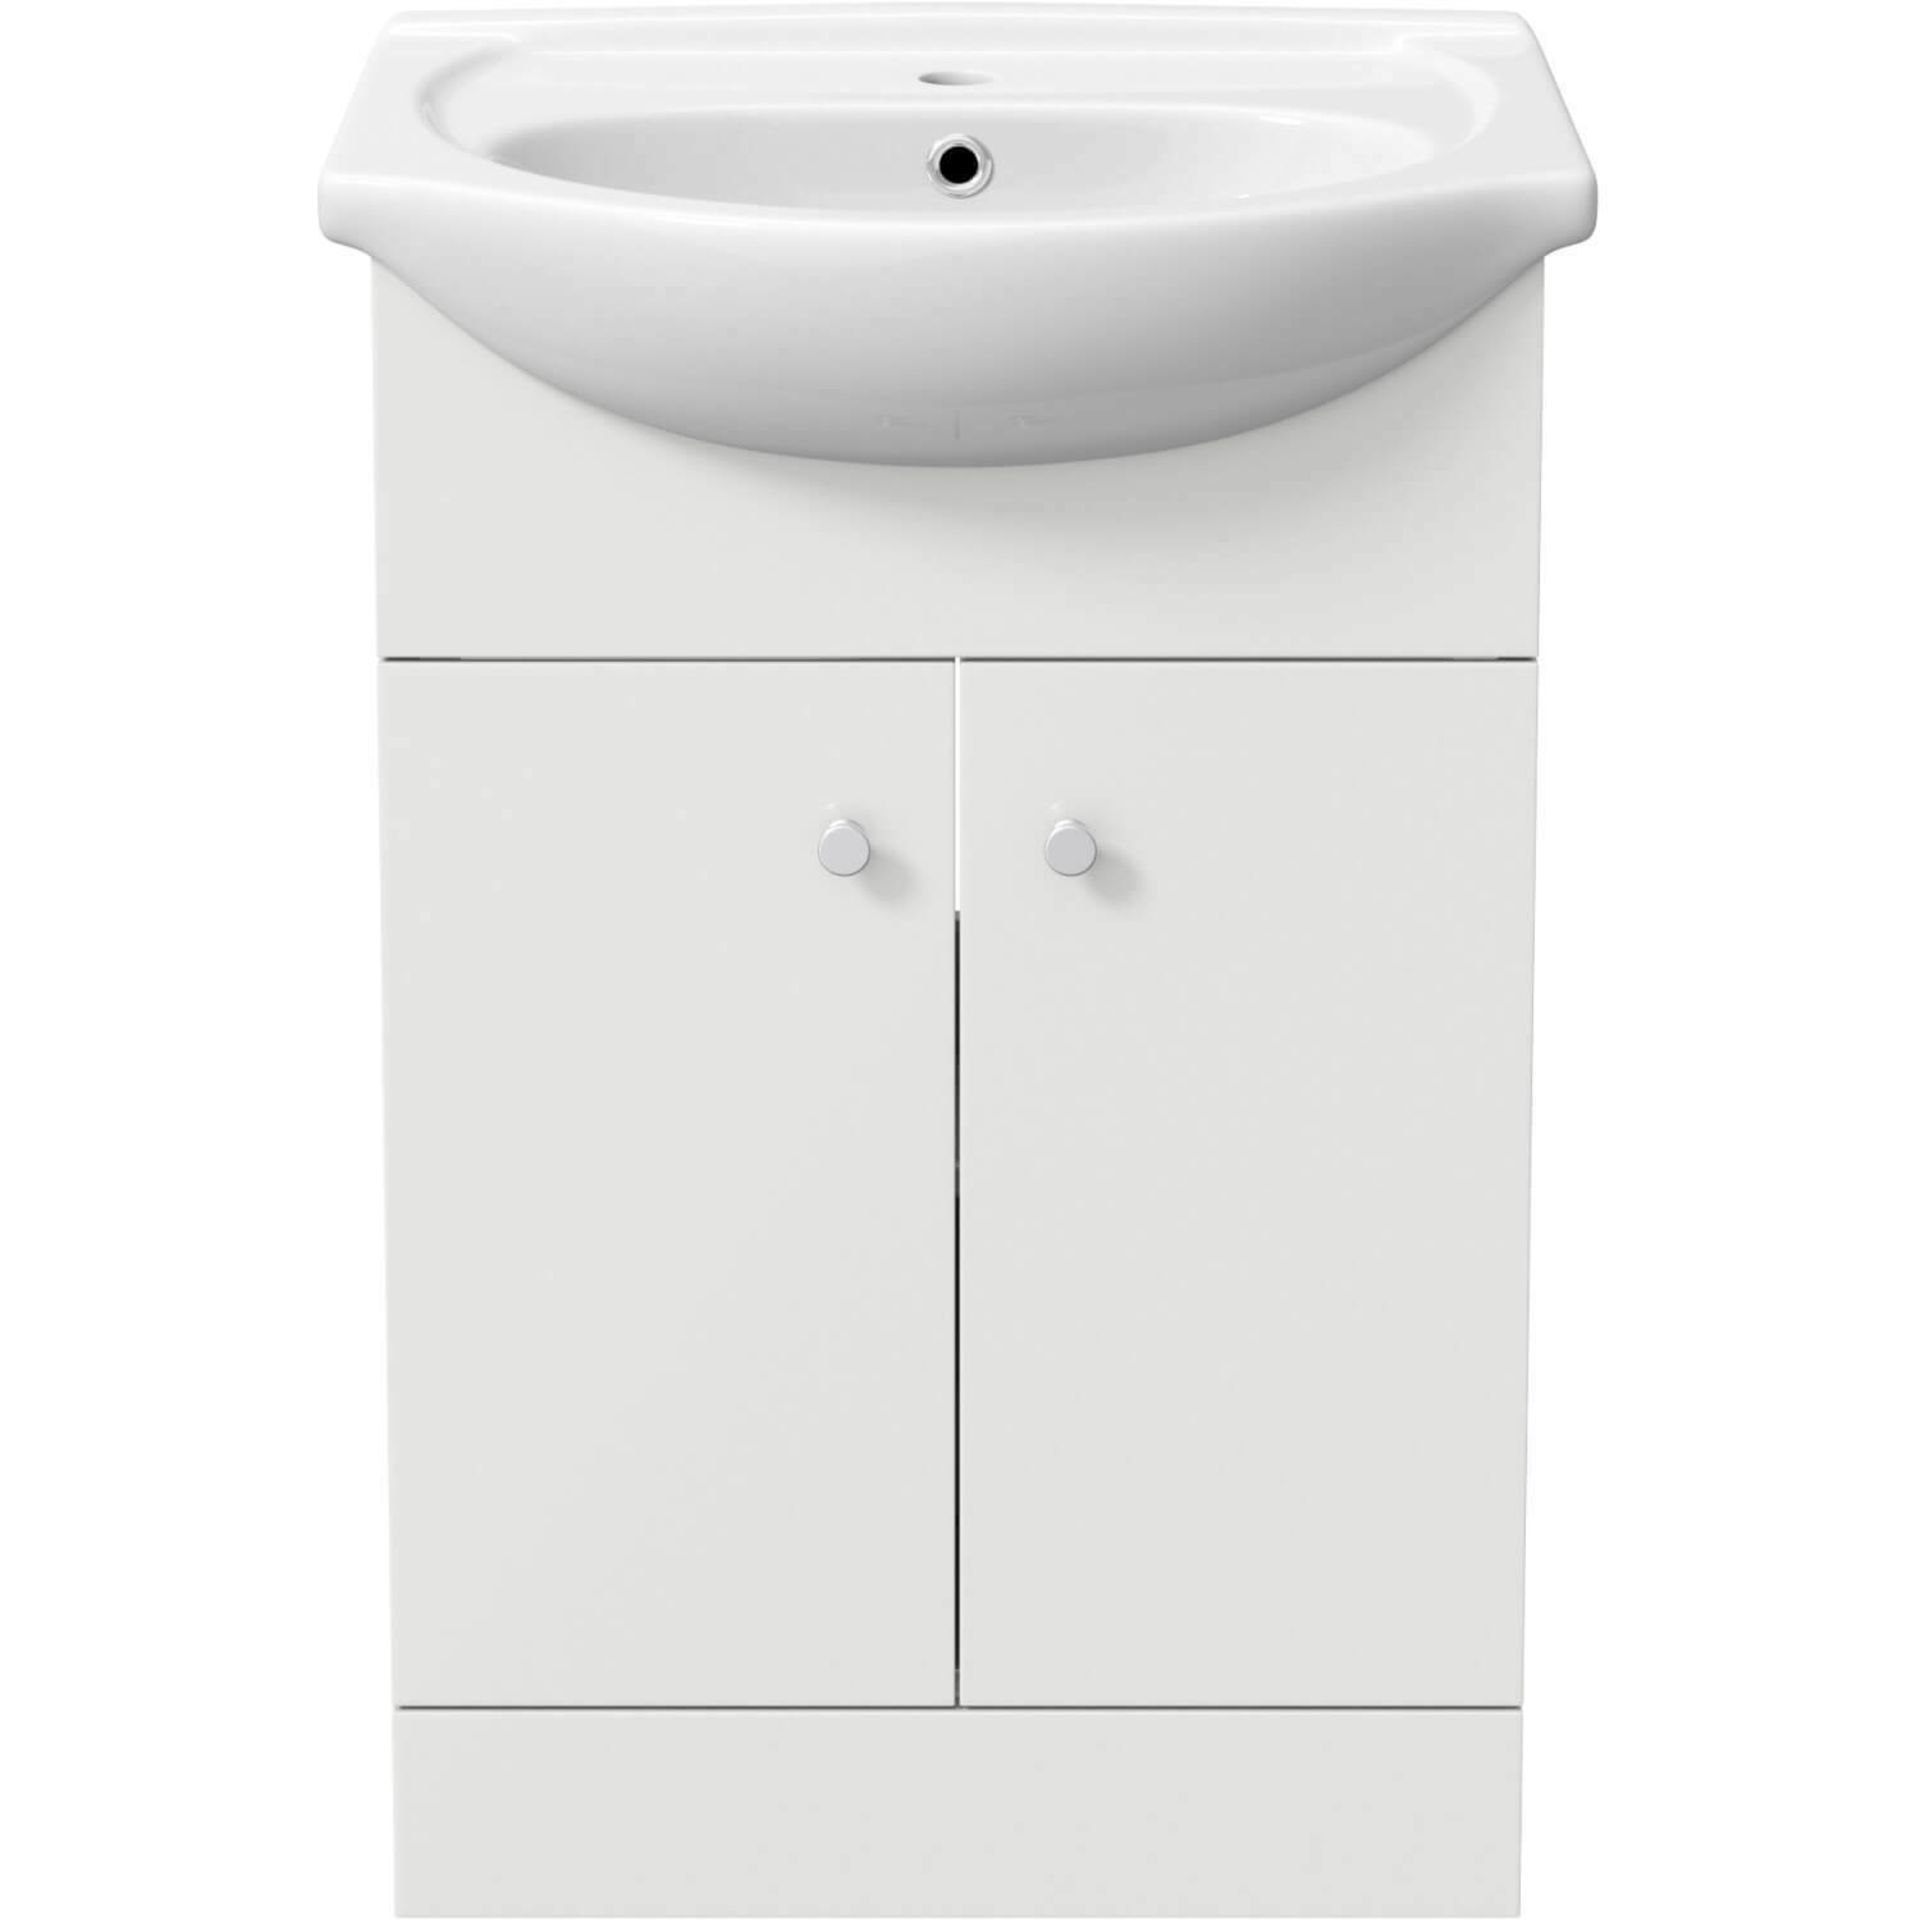 BRAND NEW BOXED 550mm Quartz Basin Sink Vanity Unit Floor Standing White.RRP £349.99.Comes - Image 3 of 3